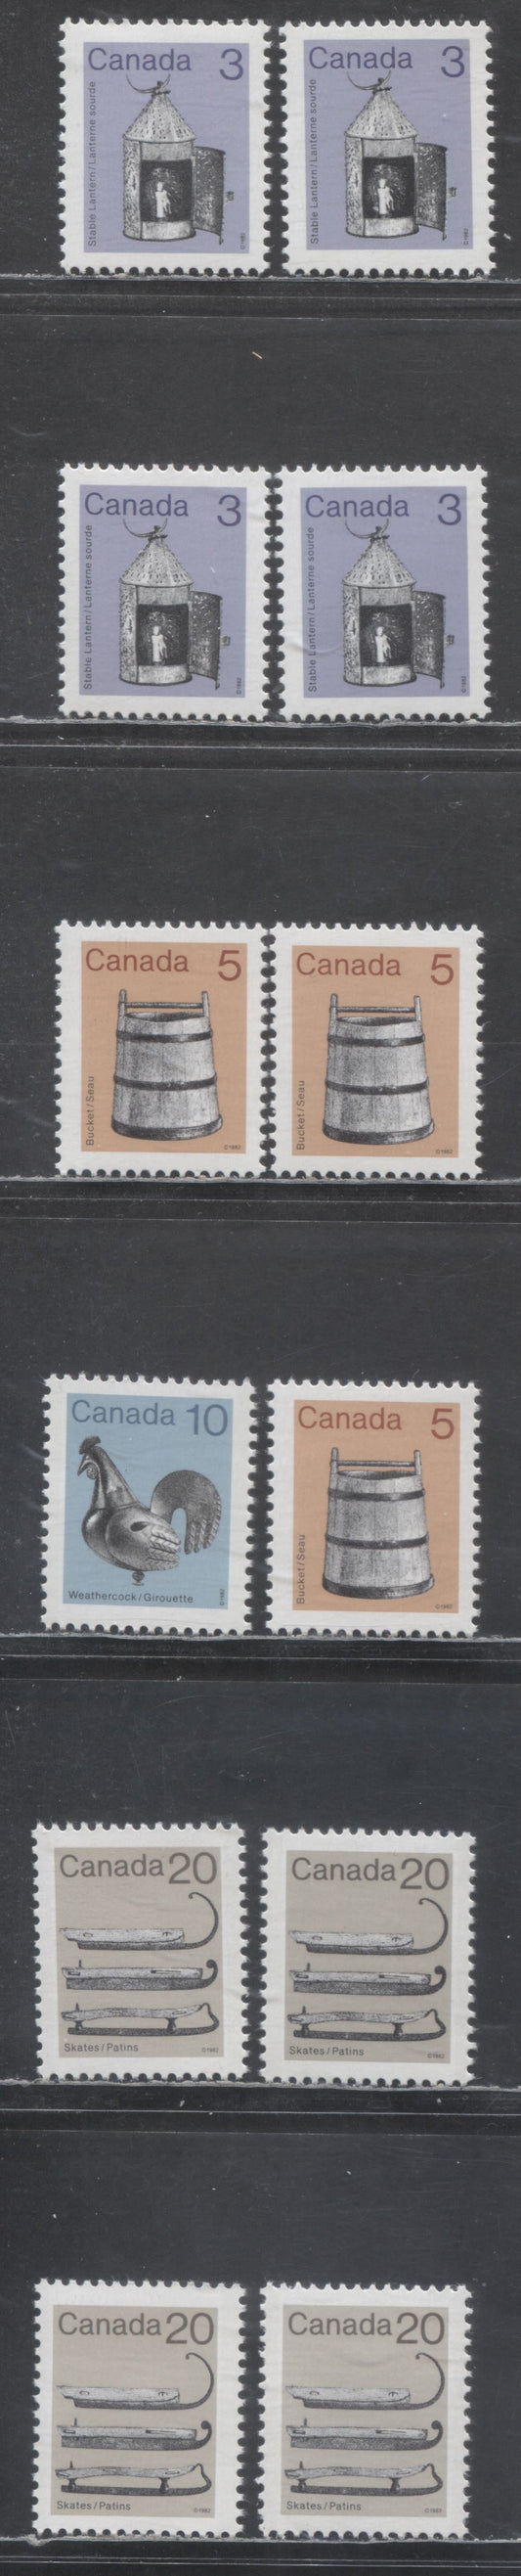 Lot 293 Canada #919iii,iv, 920ii,I, 921ii, 922ii,iii 3c-20c Flesh/Gray Brown & Multicolored Lantern-Ice Skates, 1982-1897 Low-Value Artifact Definitives, 12 VFNH Singles On DF/LF, LF/LF, LF/F & Unlisted LF/MF7 Rolland Papers